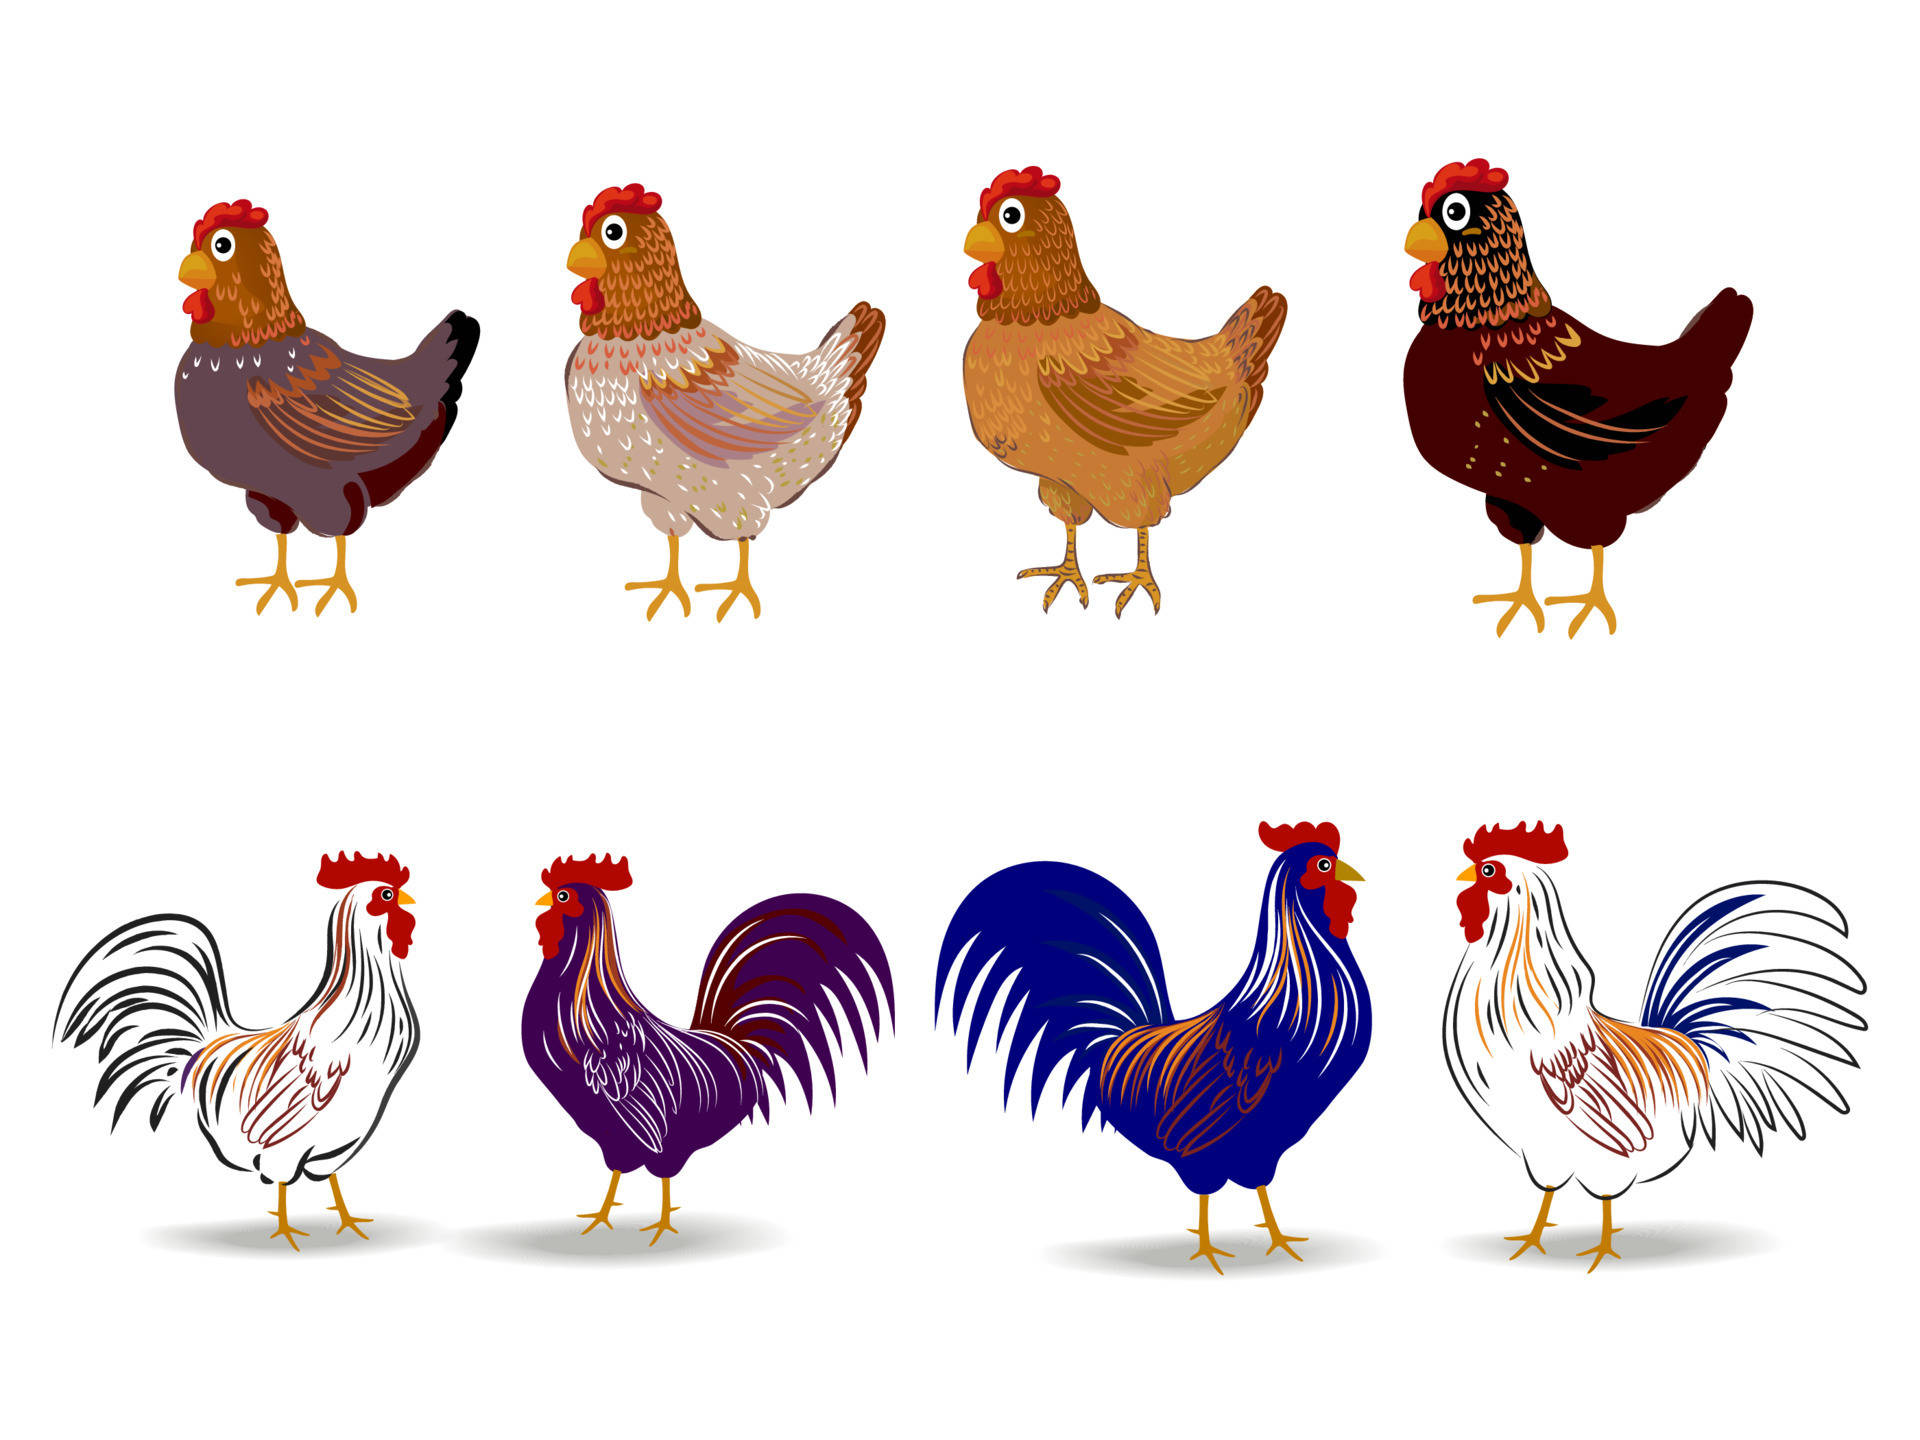 Chicken Hen Wallpaper  Free photo on Pixabay  Pixabay